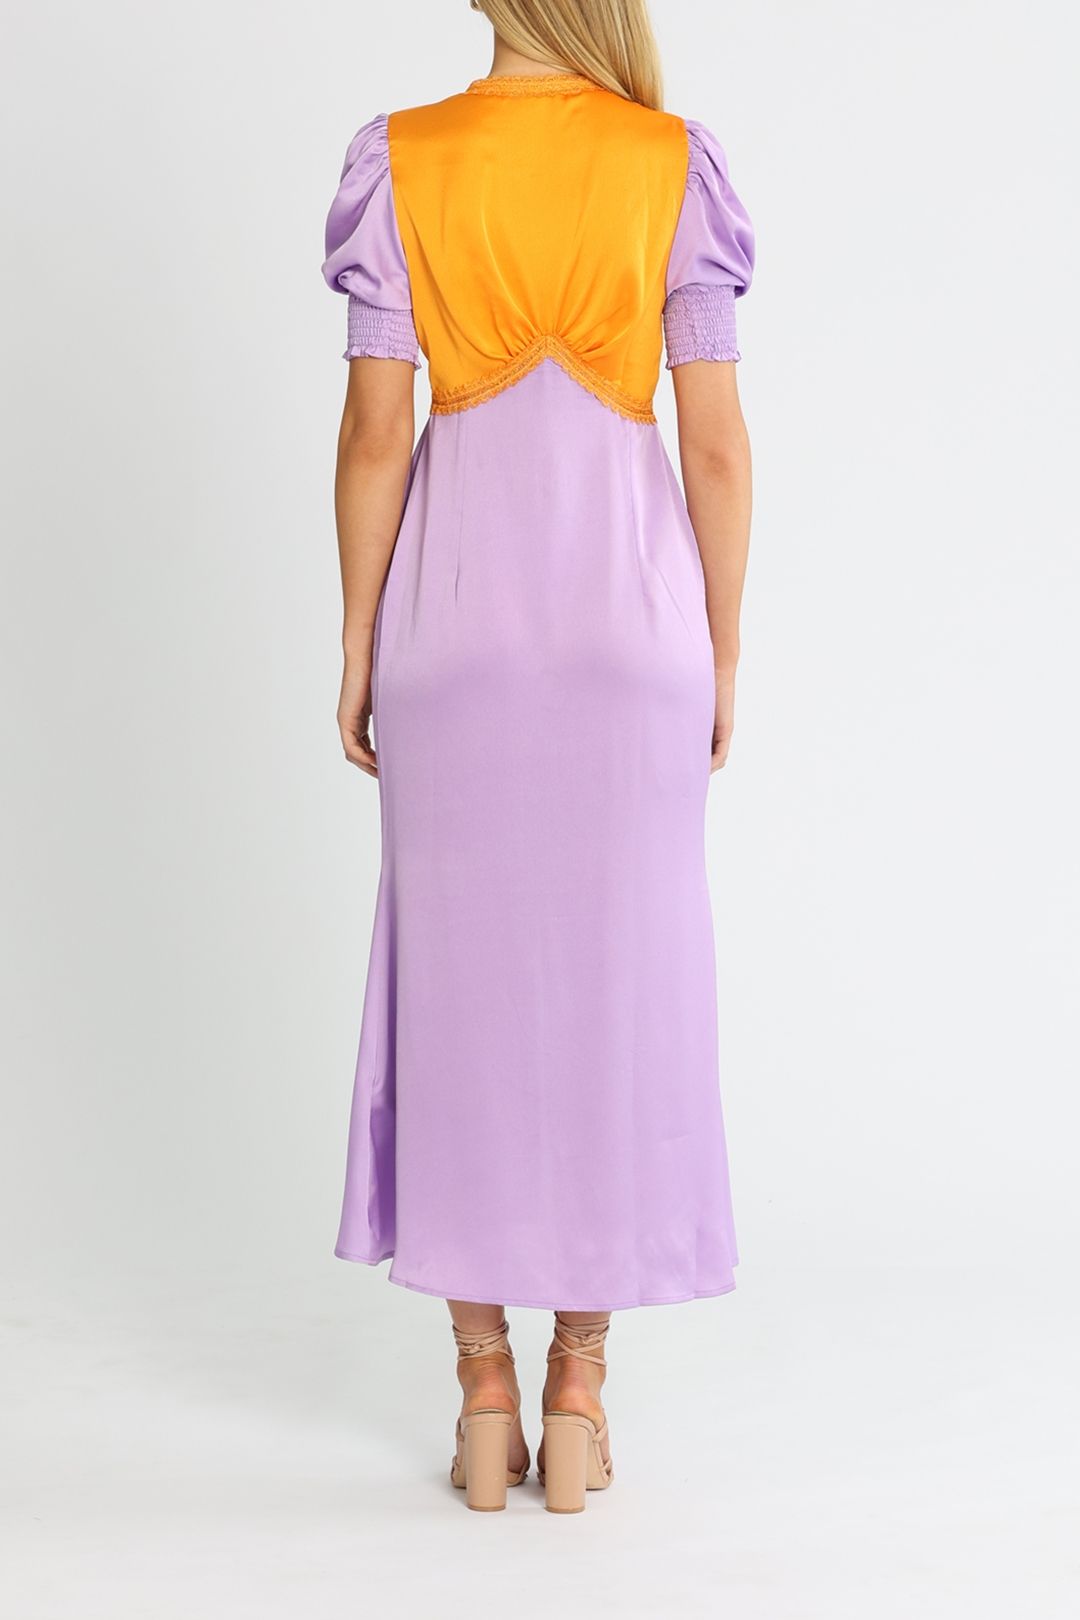 Never Fully Dressed Lilac And Orange Lindos dress